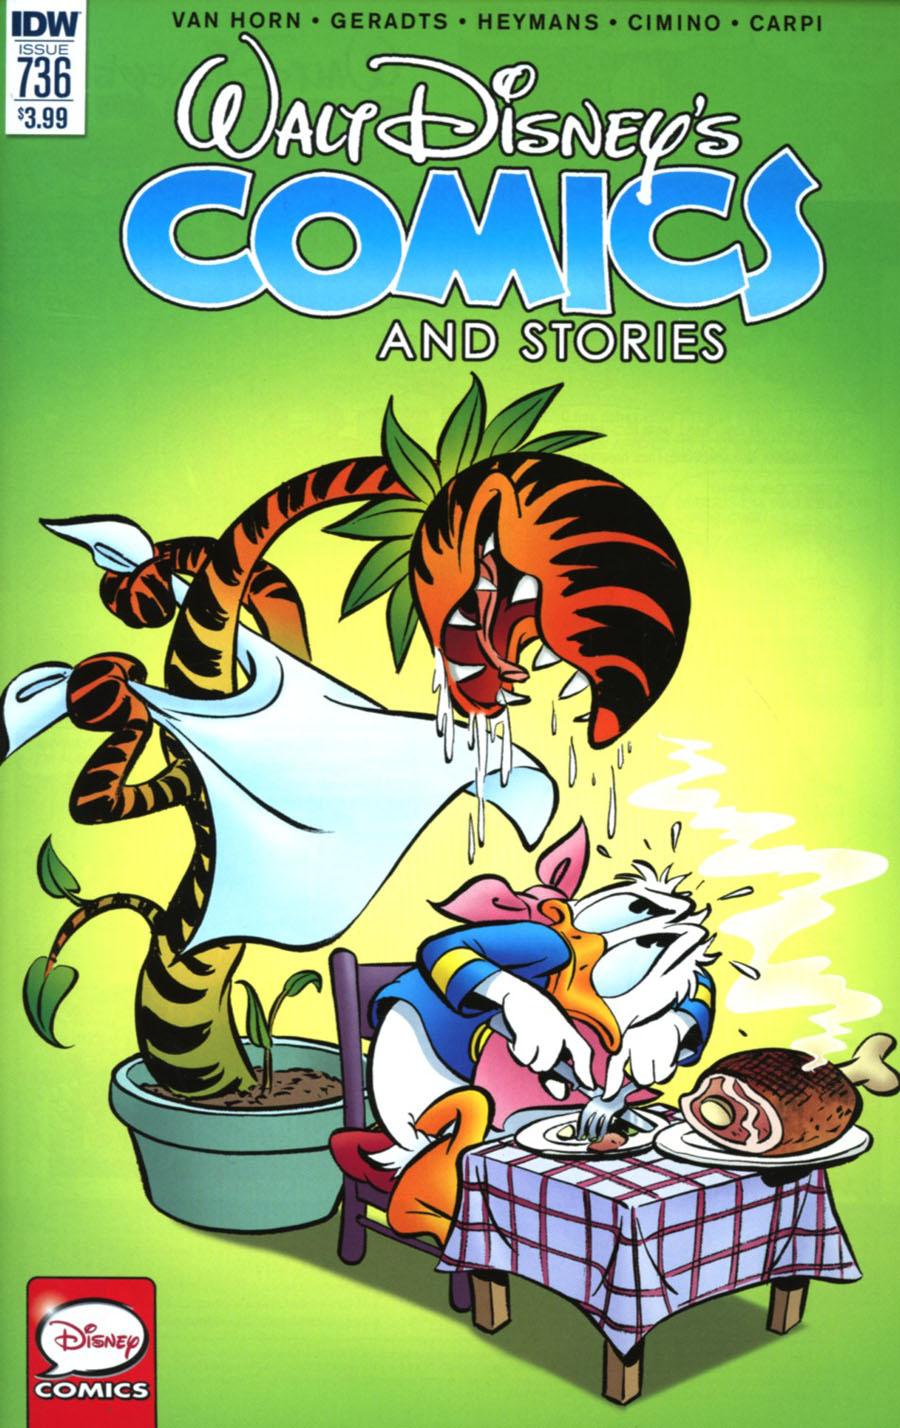 Walt Disneys Comics & Stories Vol. 1 #736